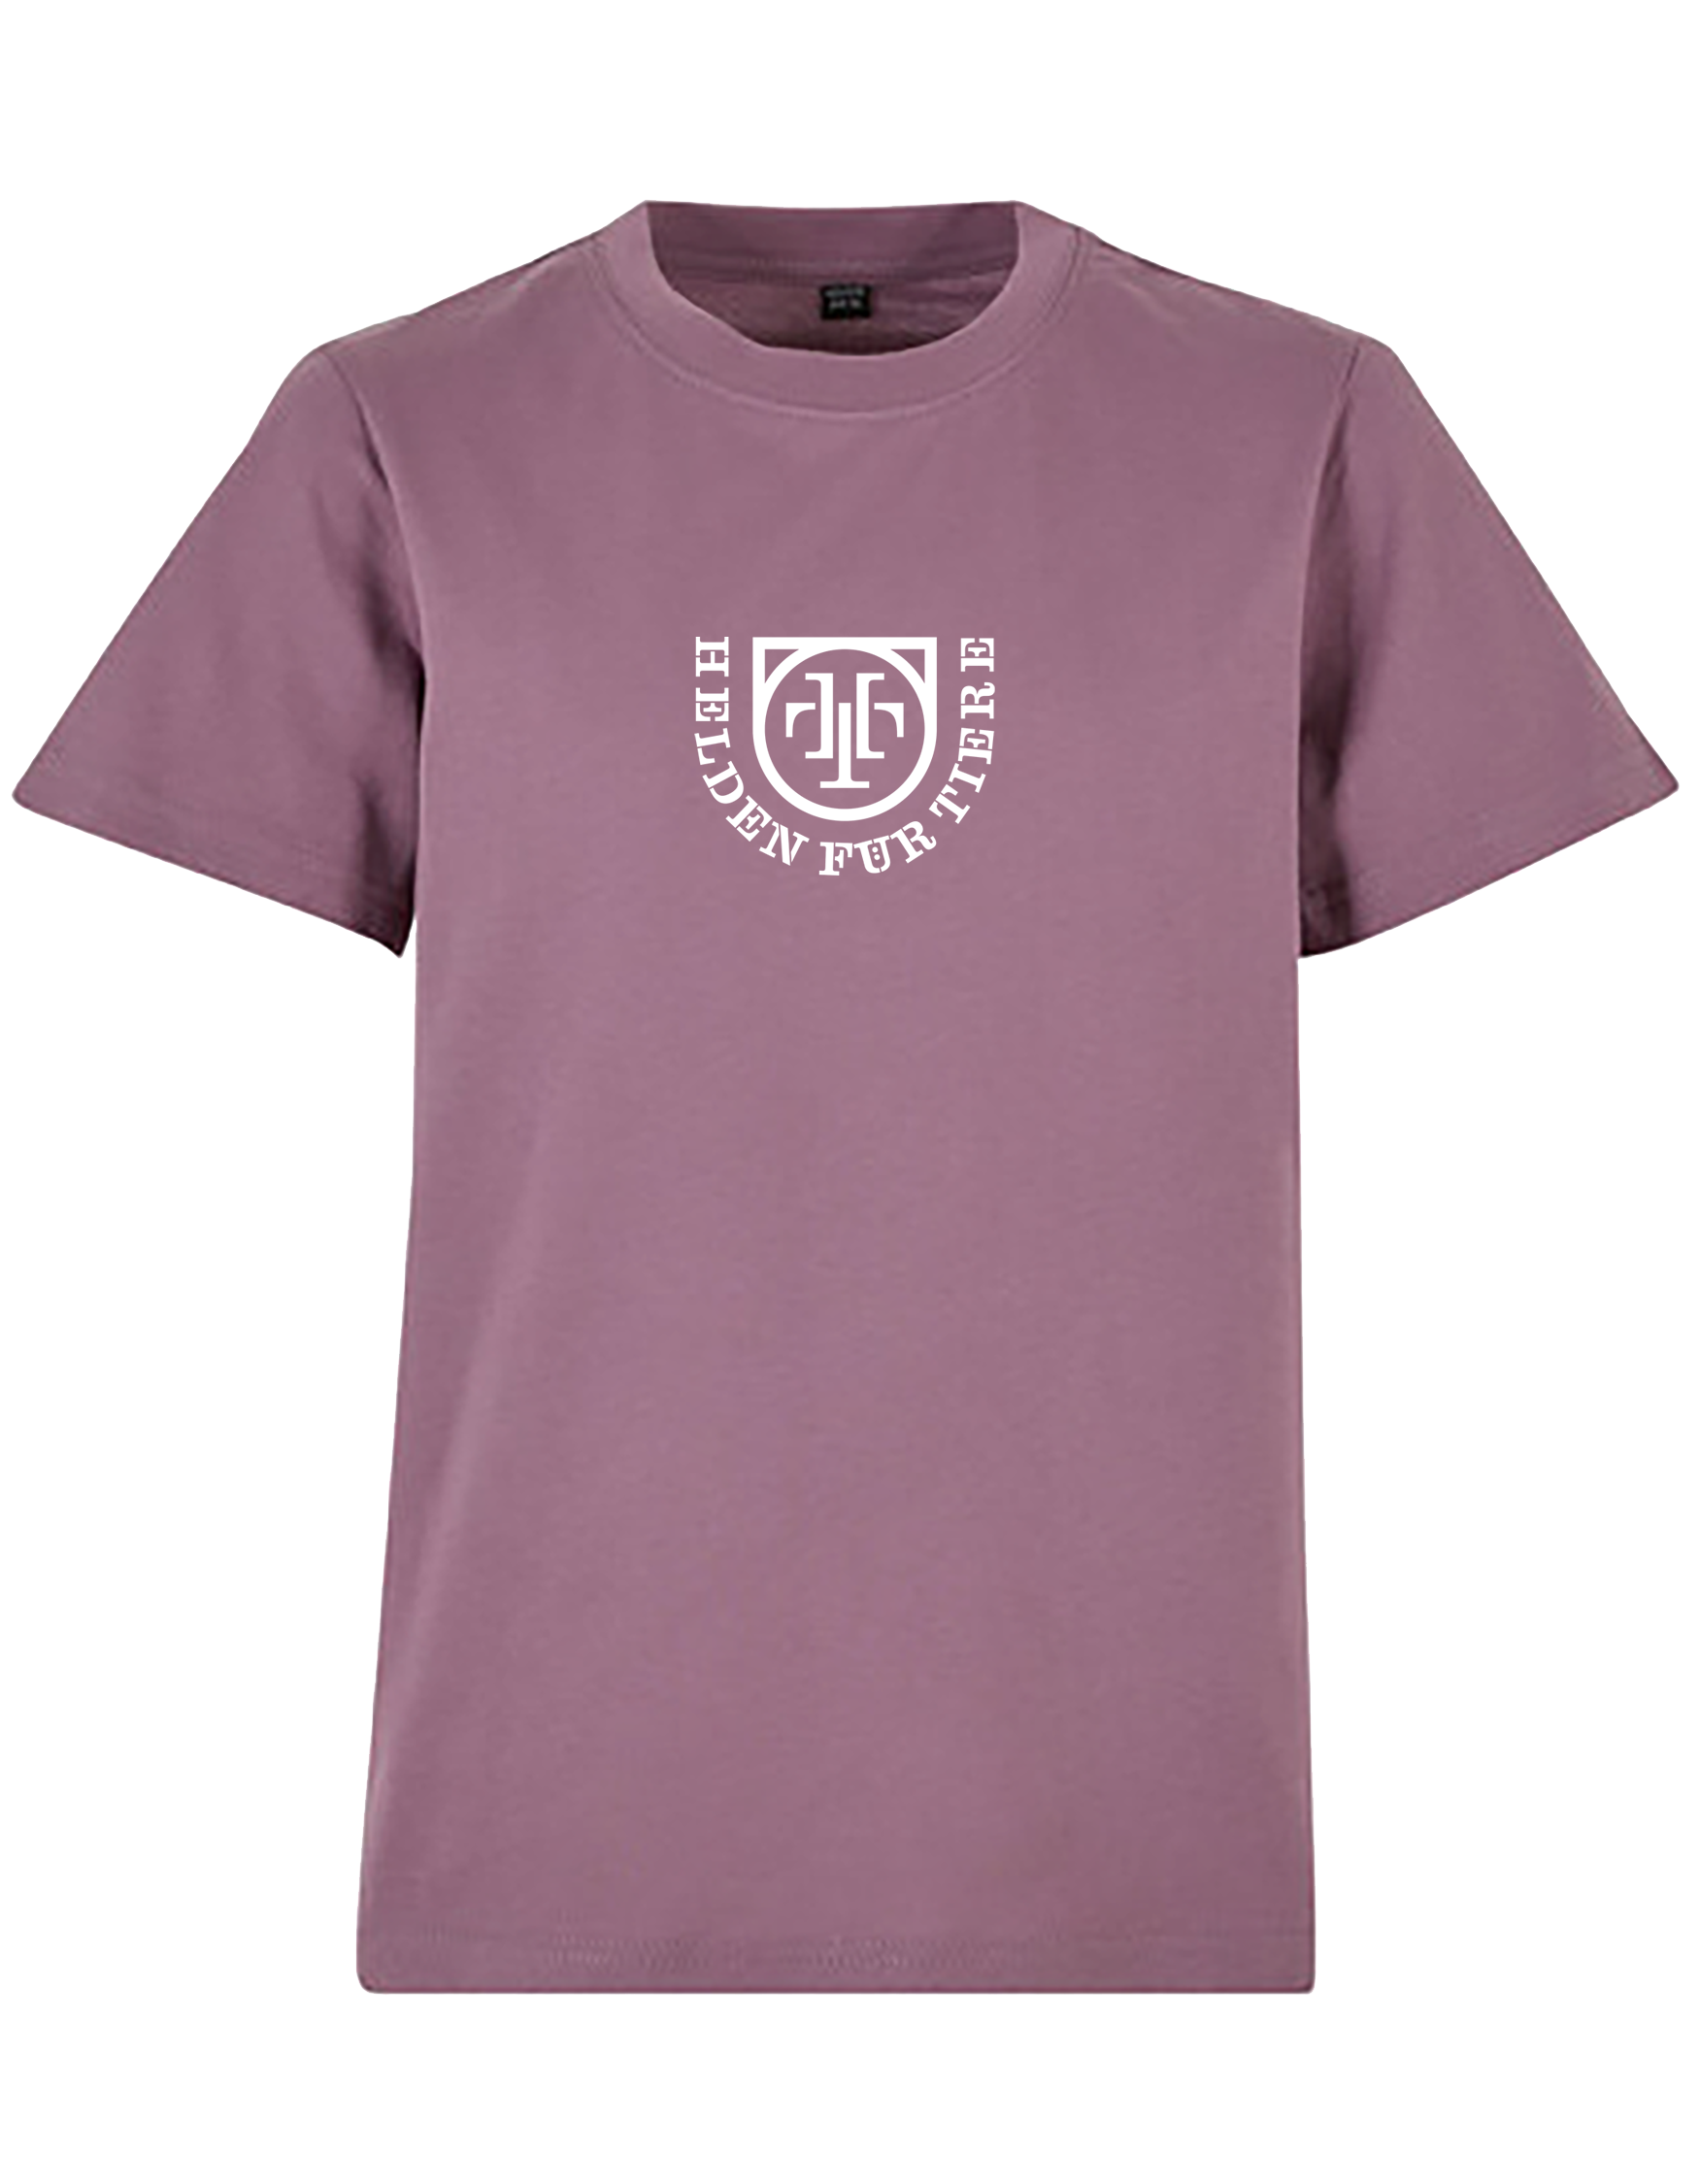 HFT Kids Shirt (grape violet)